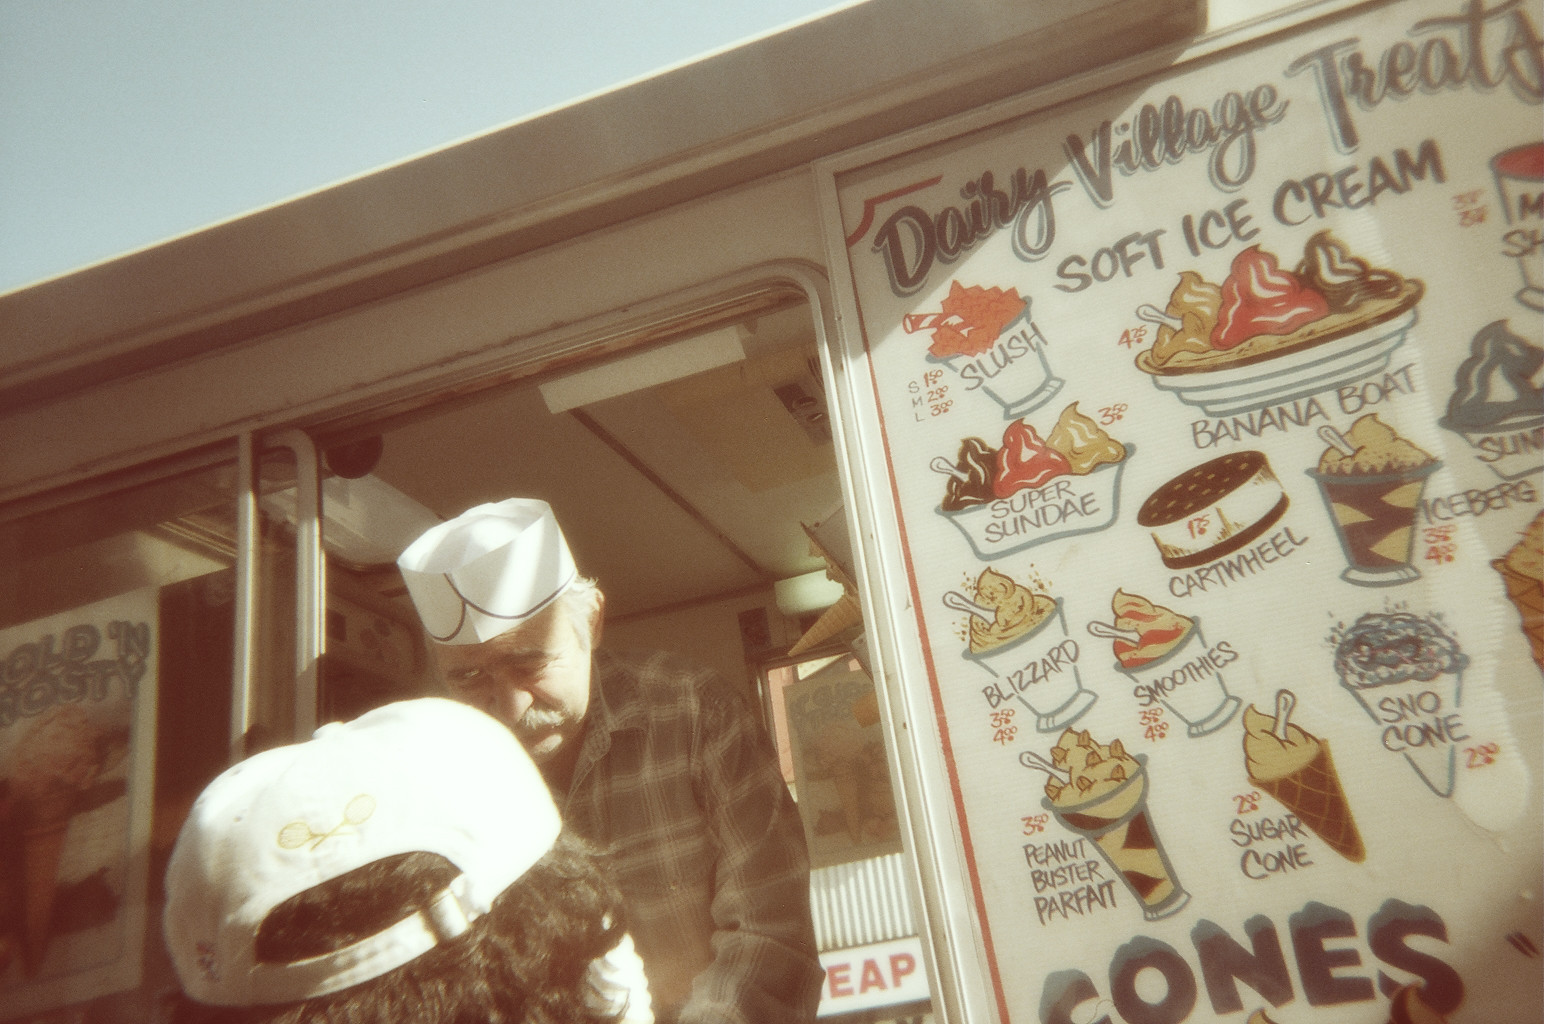 icecream truck